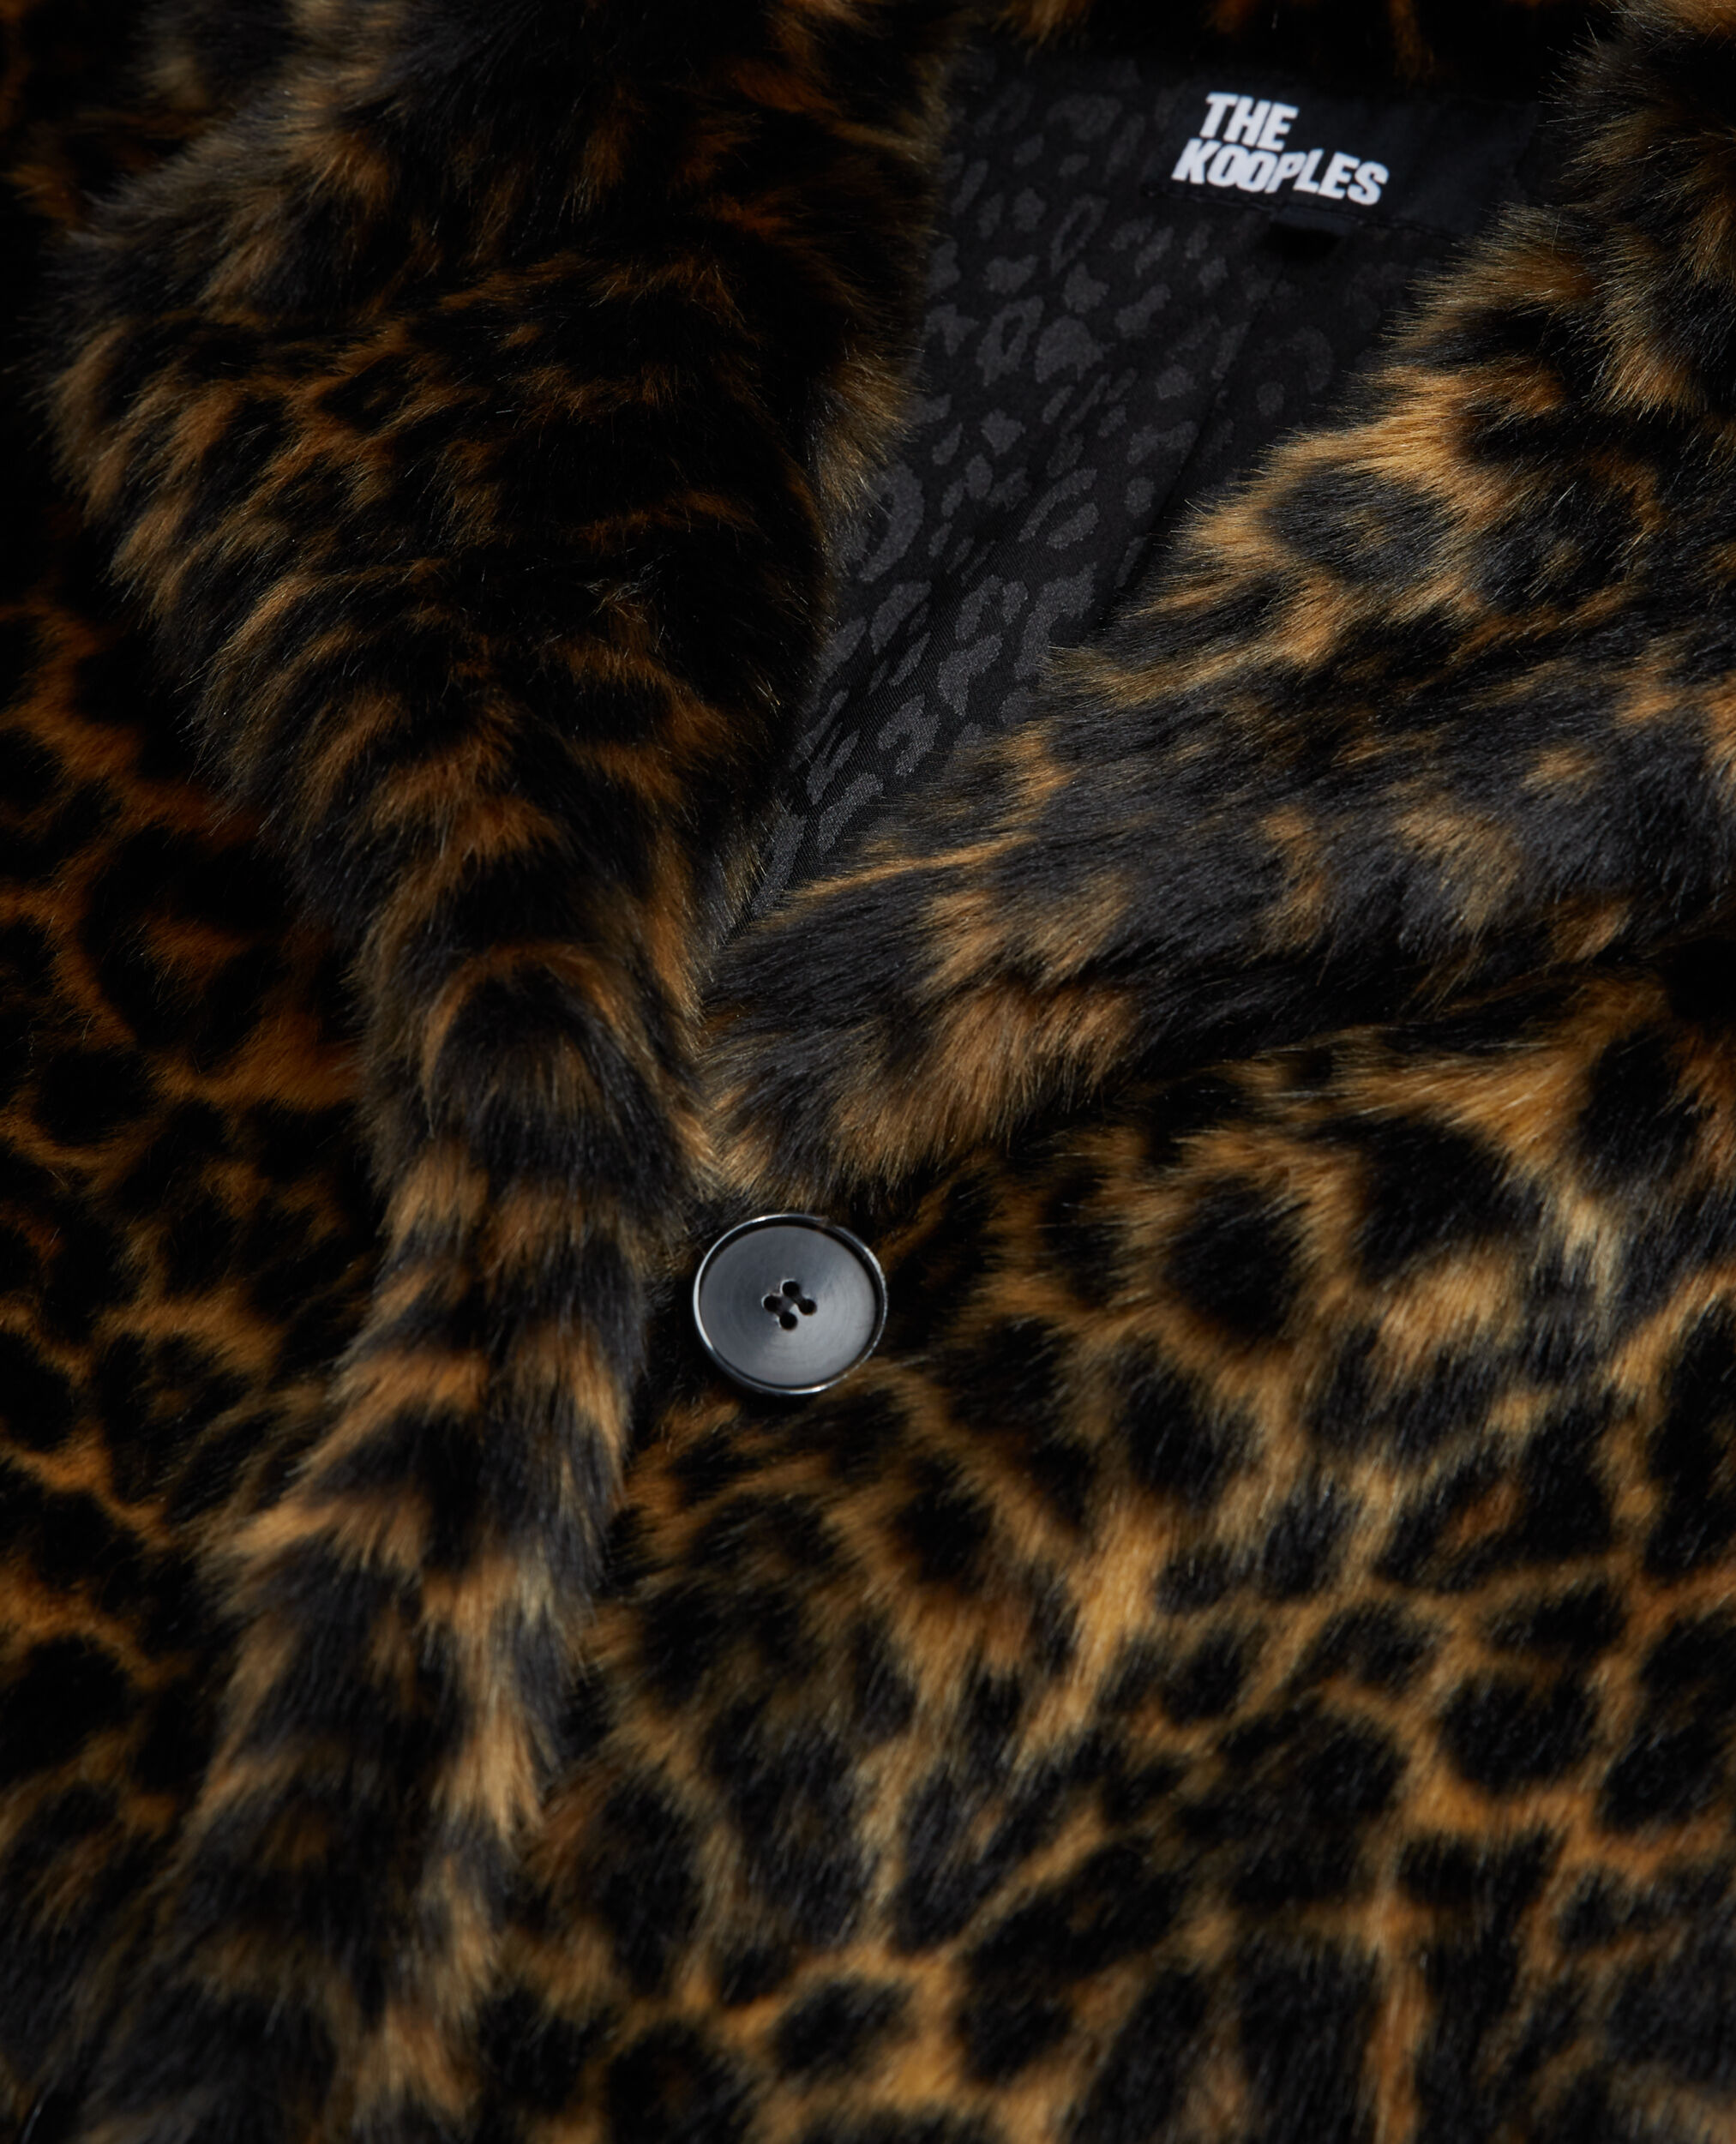 Leopard print faux fur coat, LEOPARD, hi-res image number null